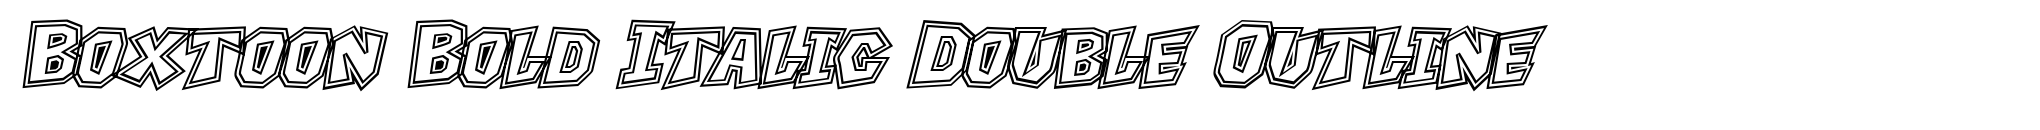 Boxtoon Bold Italic Double Outline image